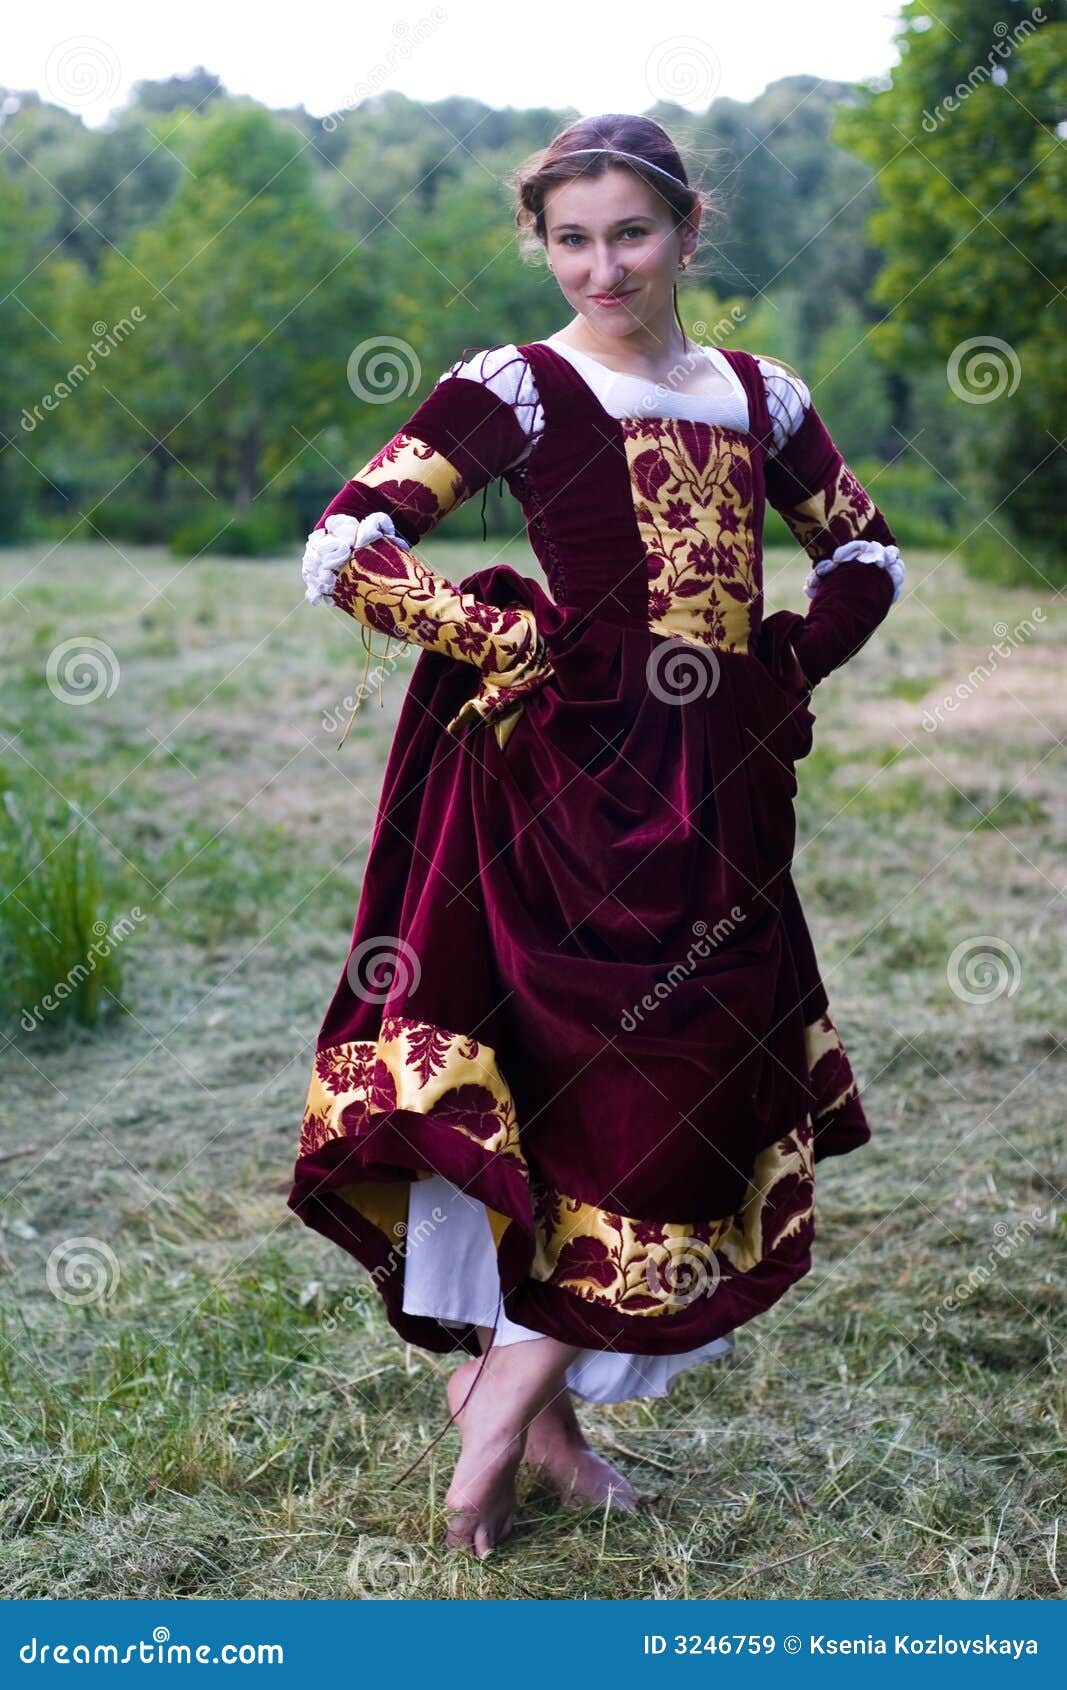 italian renaissance dress